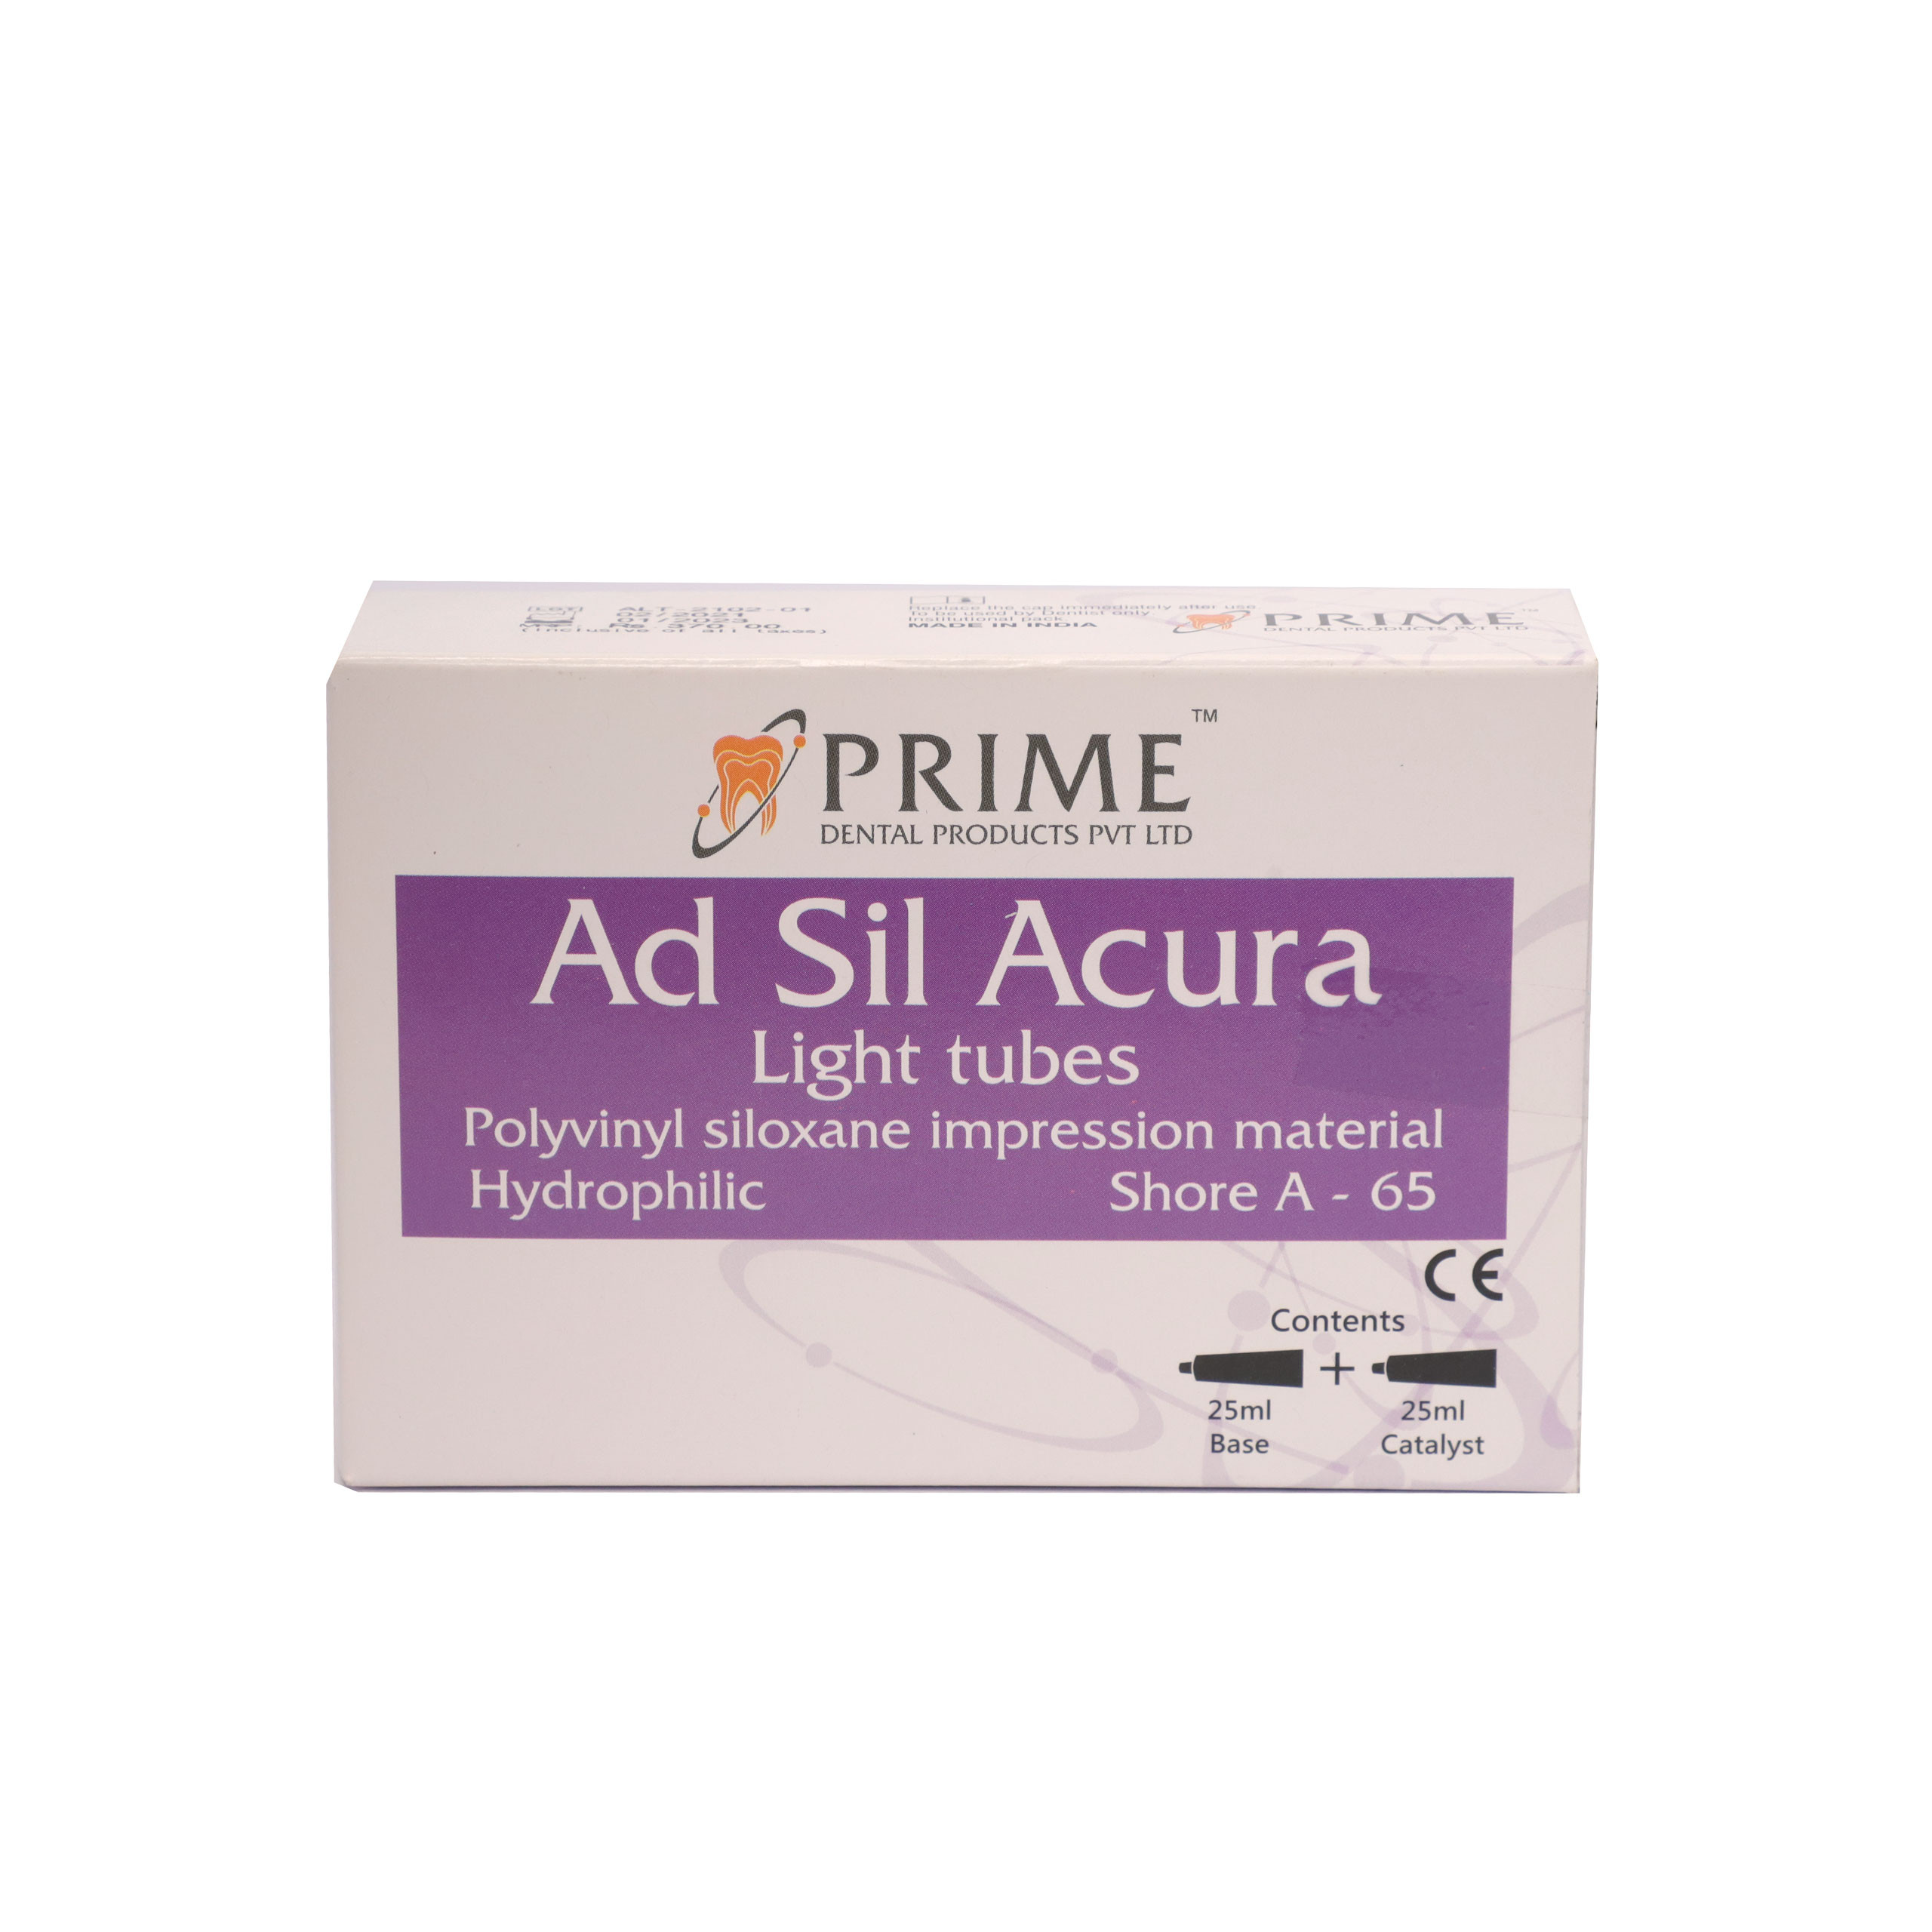 Prime Ad Sil Acura Light tube